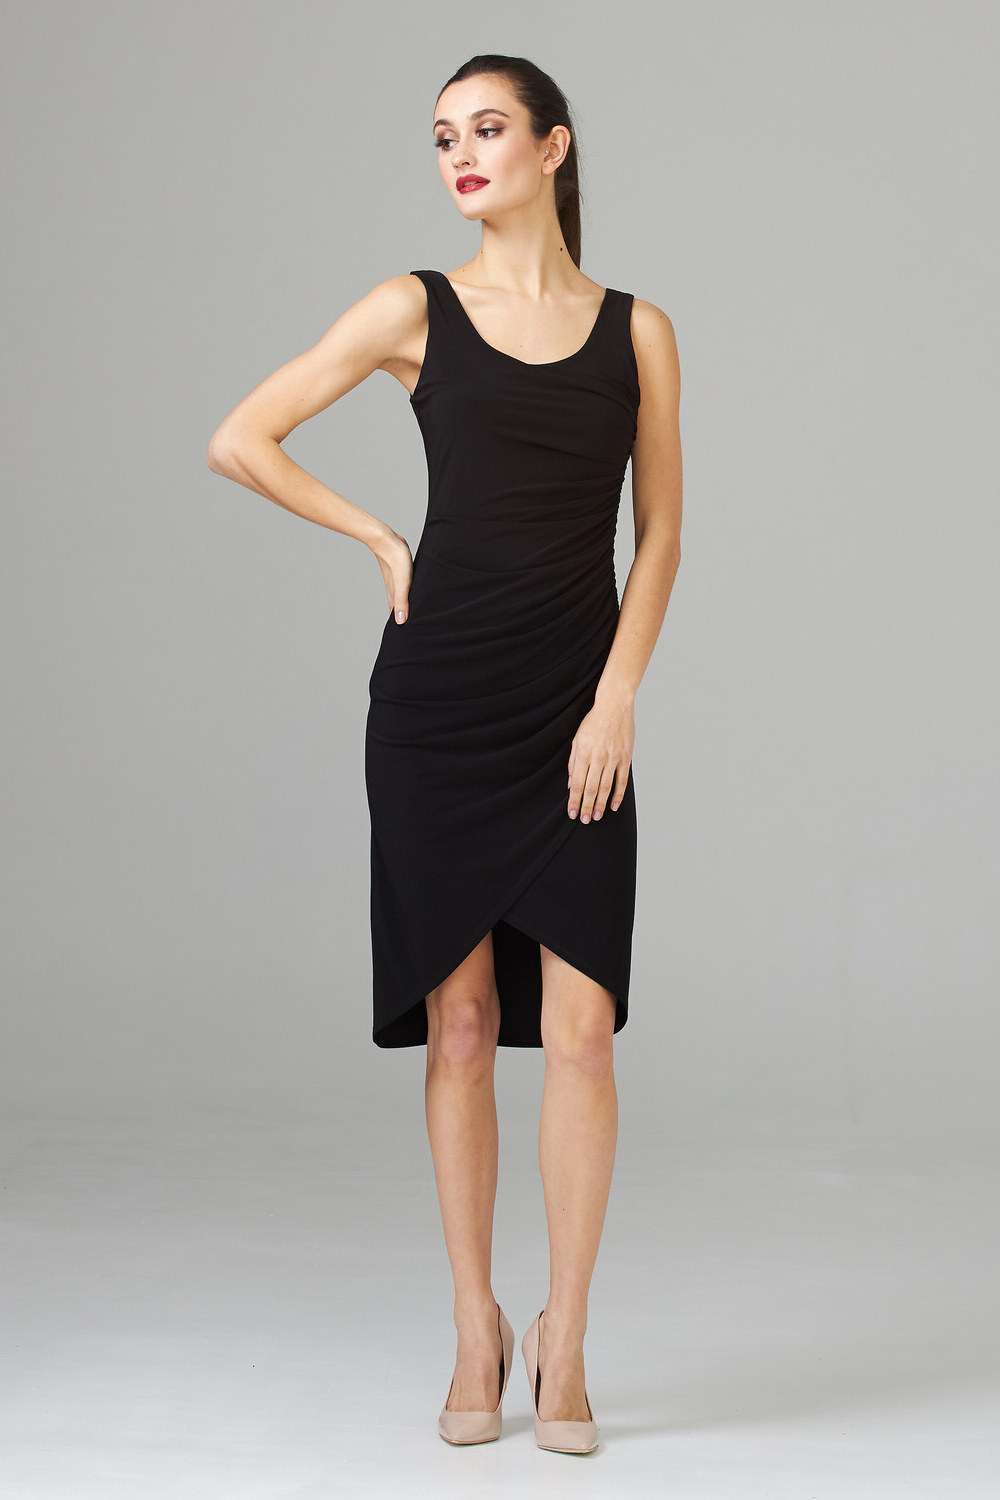 Joseph Ribkoff Dress Style 201189. Black